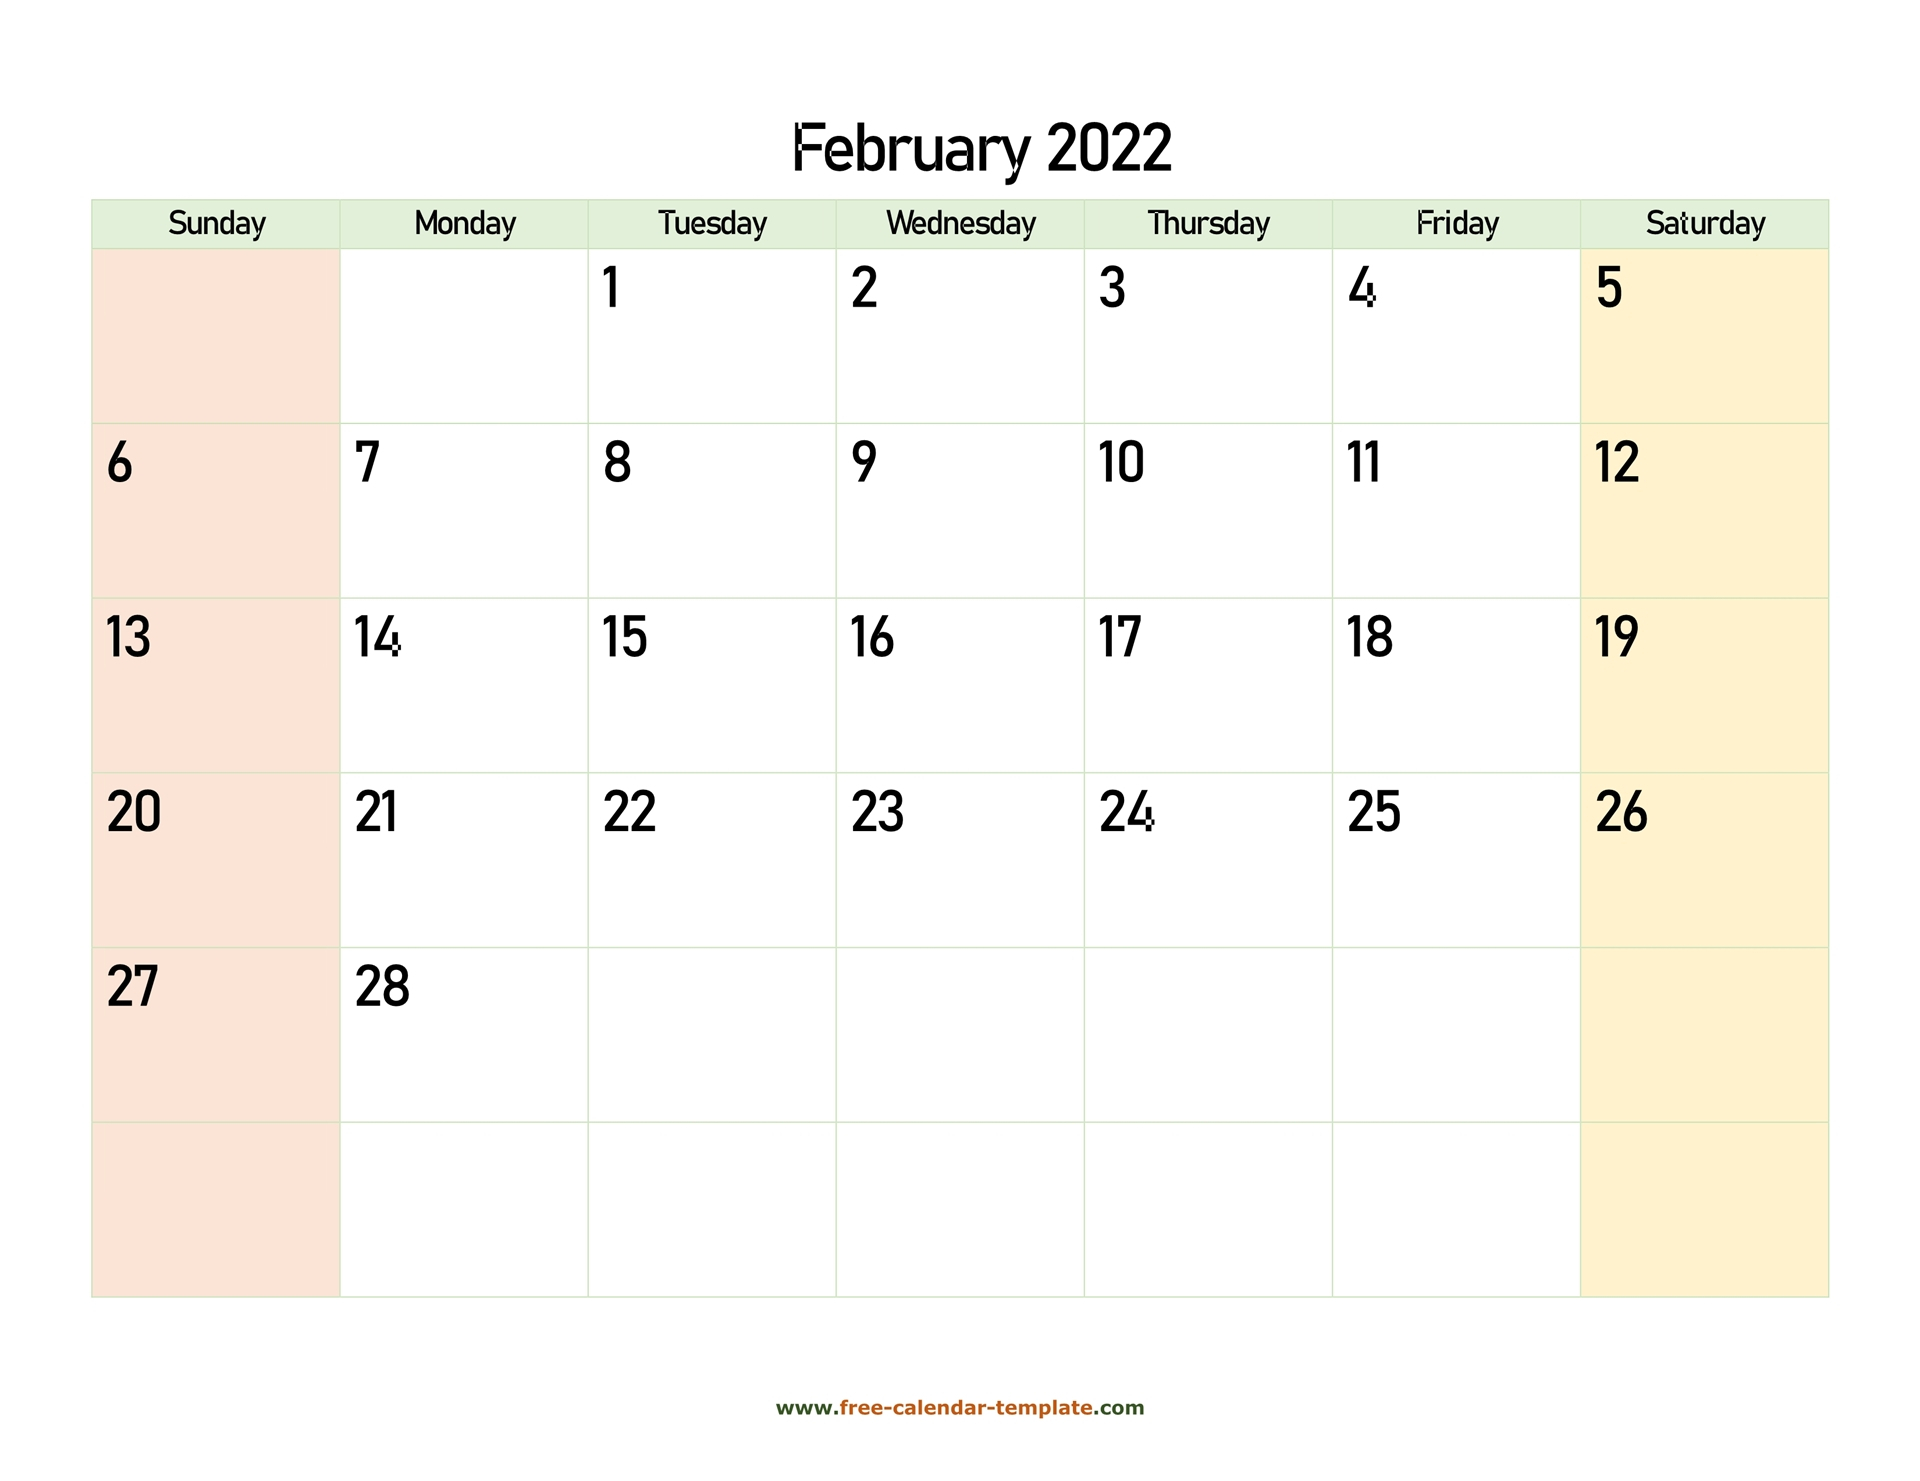 Get February 2022 Fillable Calendar